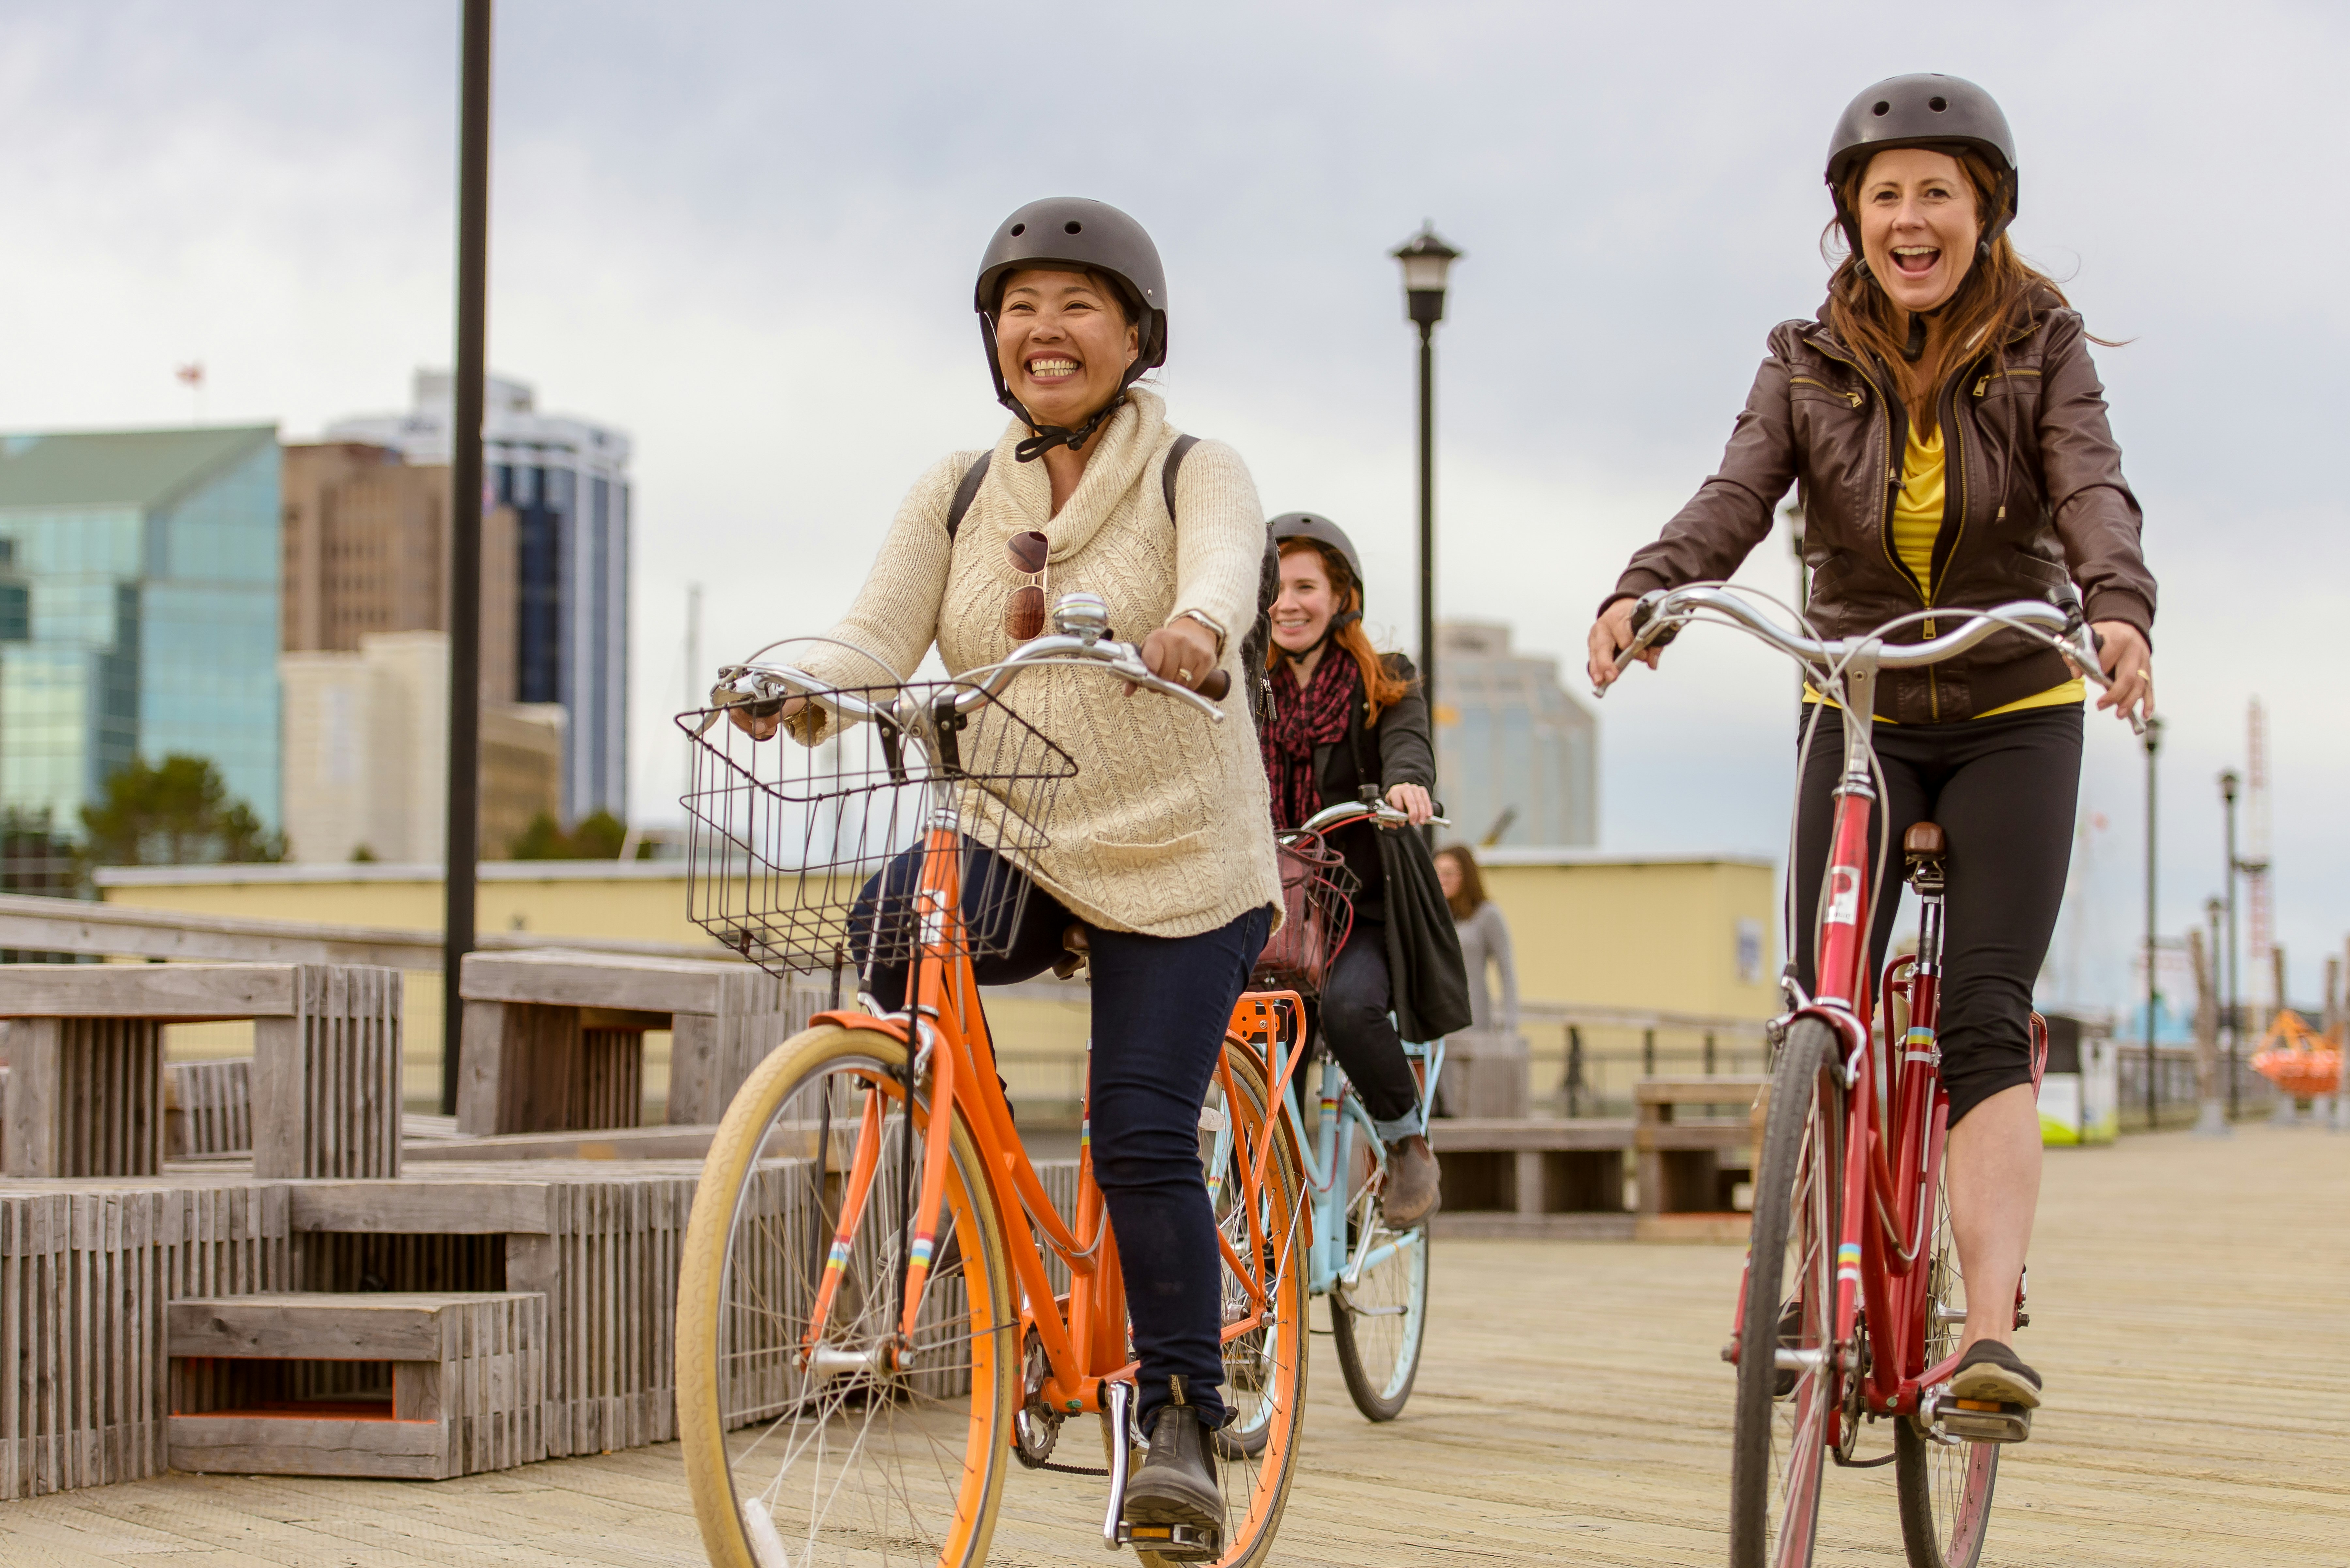 Three people riding bikes across a dock 